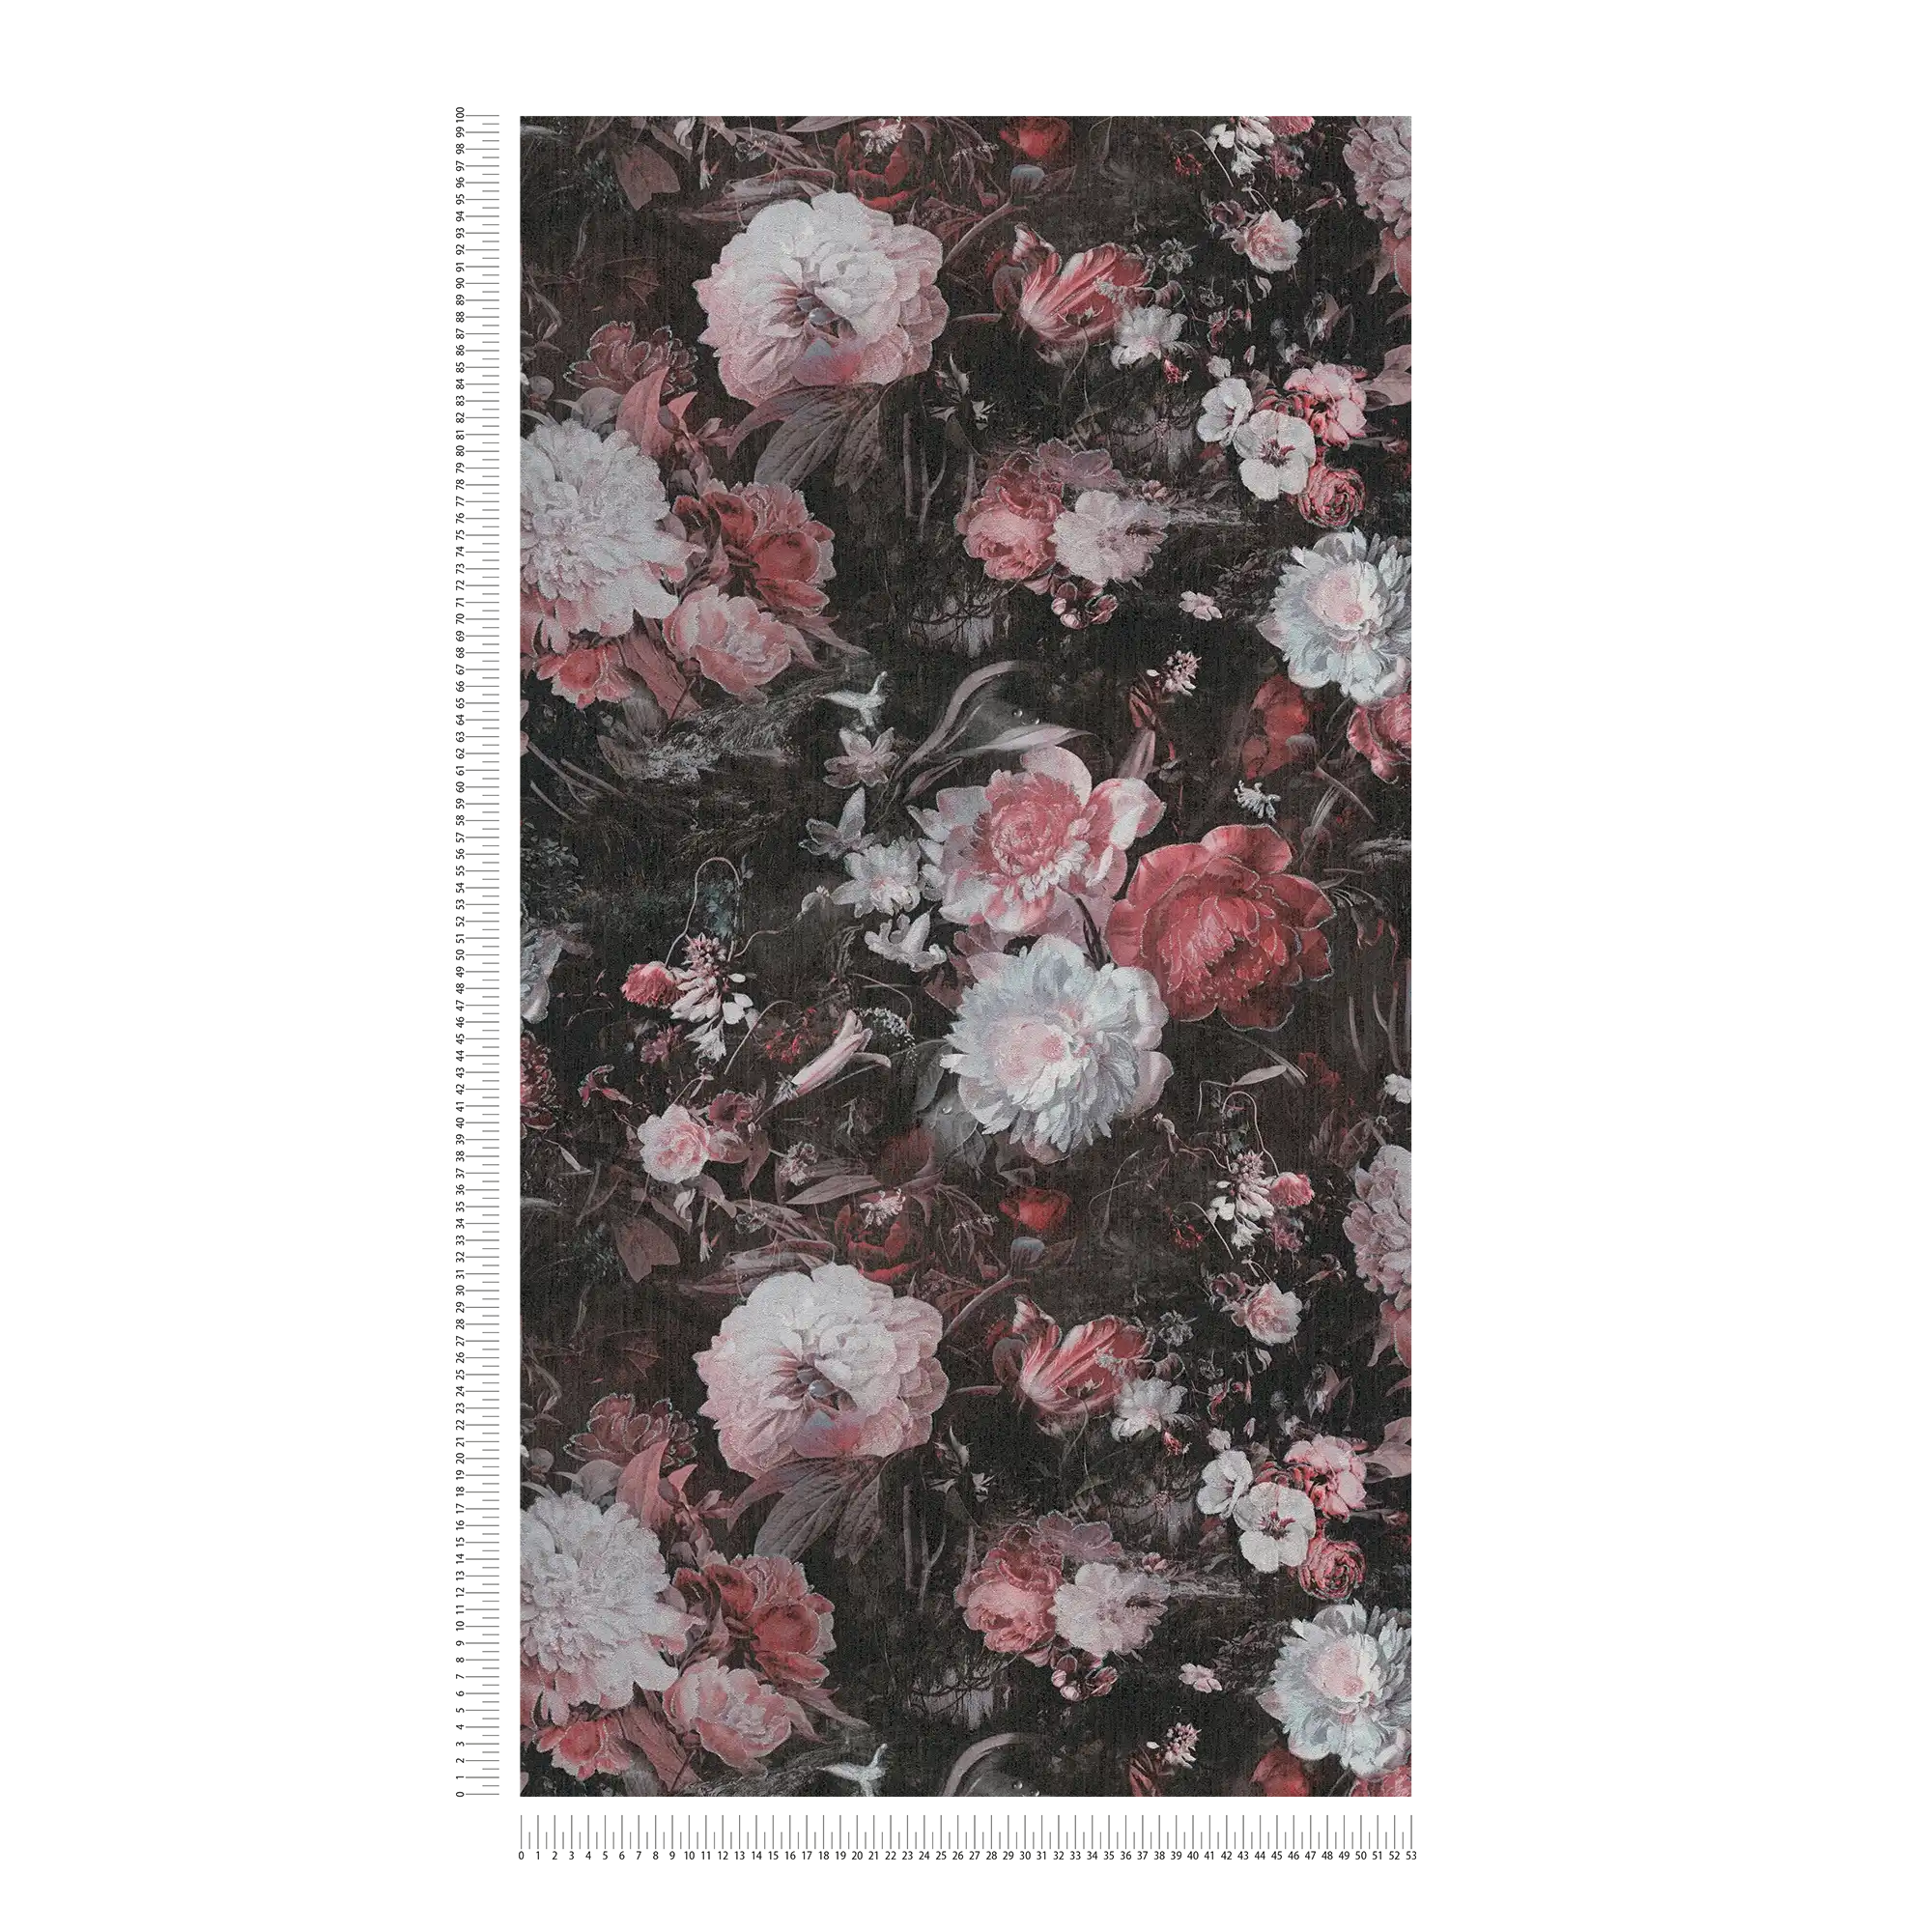             Vintage stijl rozen behang - metallic, zwart, wit
        